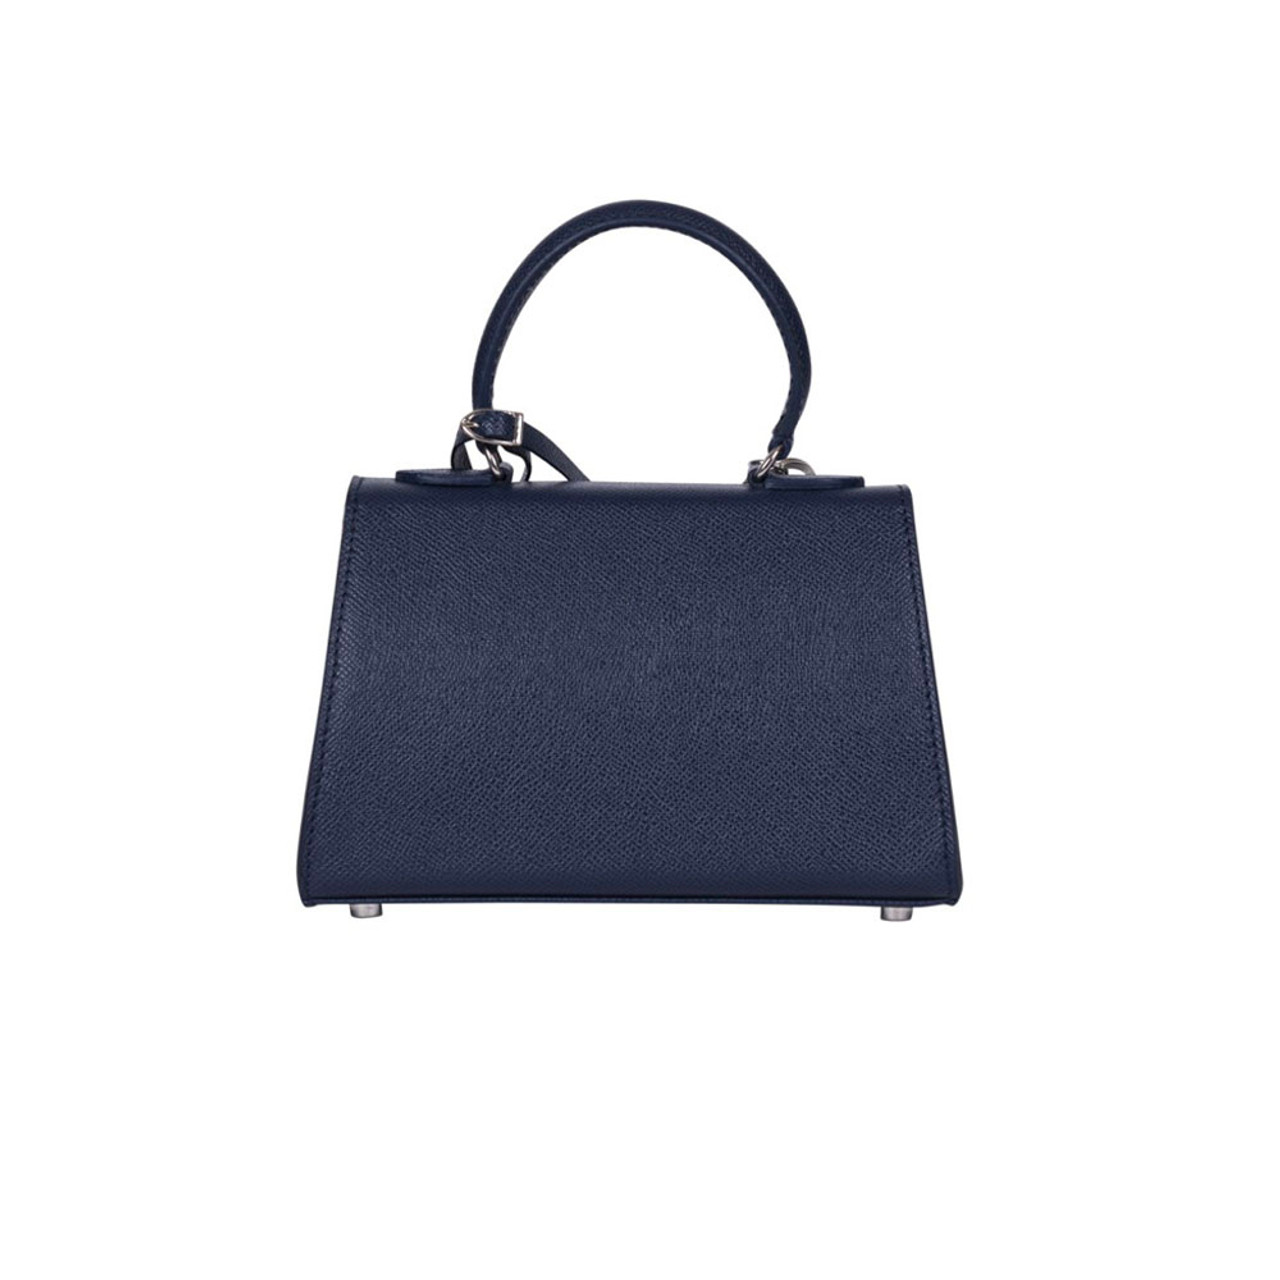 Buti Suzy Mignon Palmellato Leather Grab Handbag